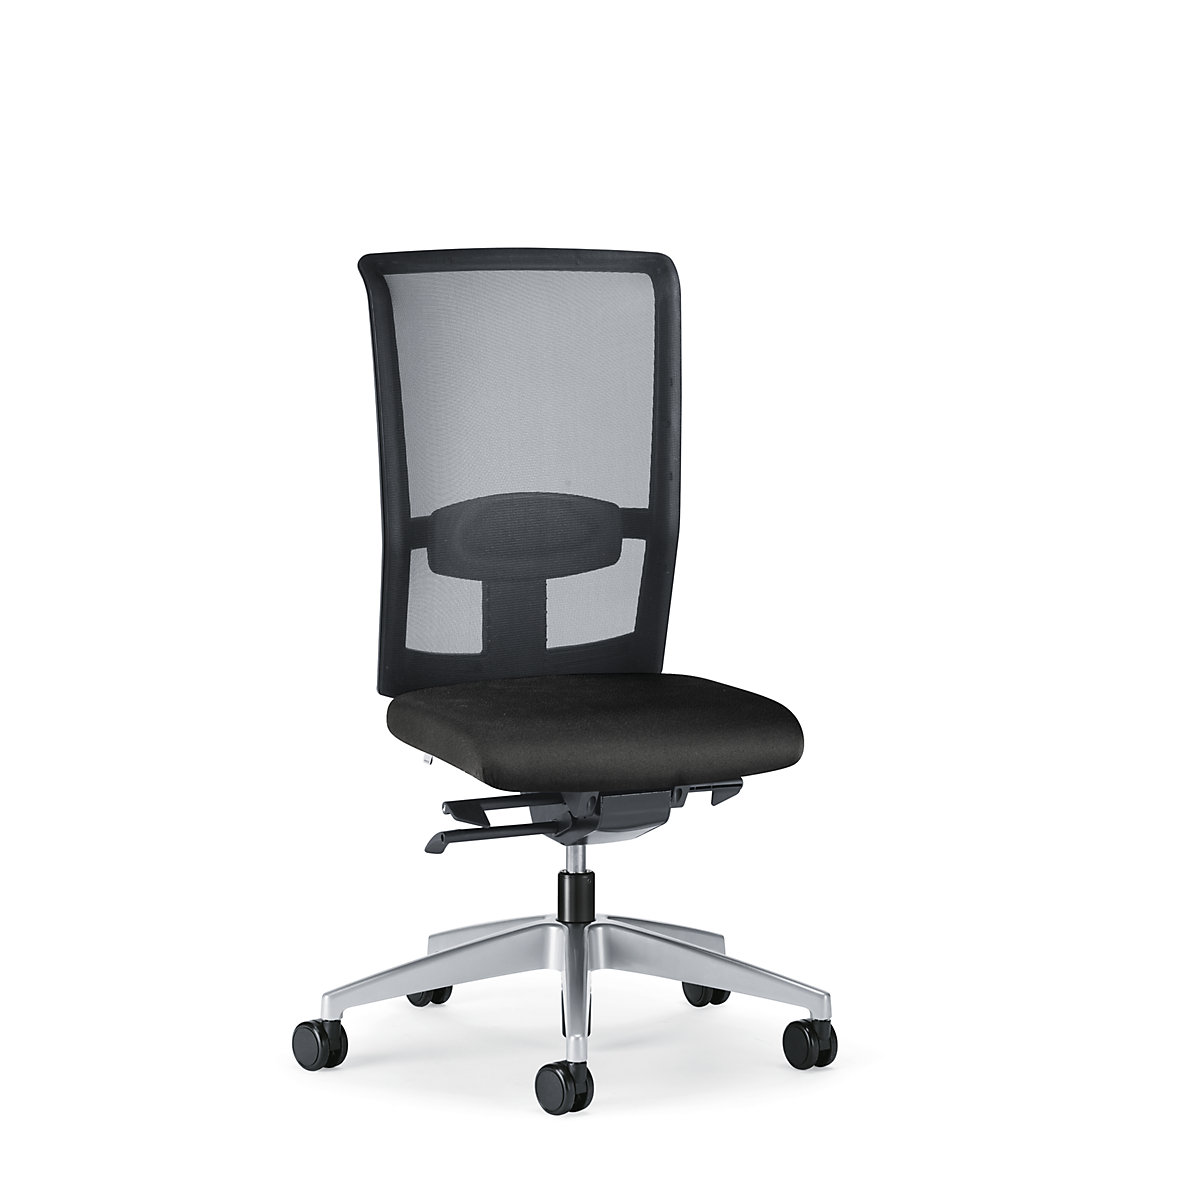 GOAL AIR office swivel chair, back rest height 545 mm – interstuhl, brilliant silver frame, with hard castors, graphite black, seat depth 410 mm-1